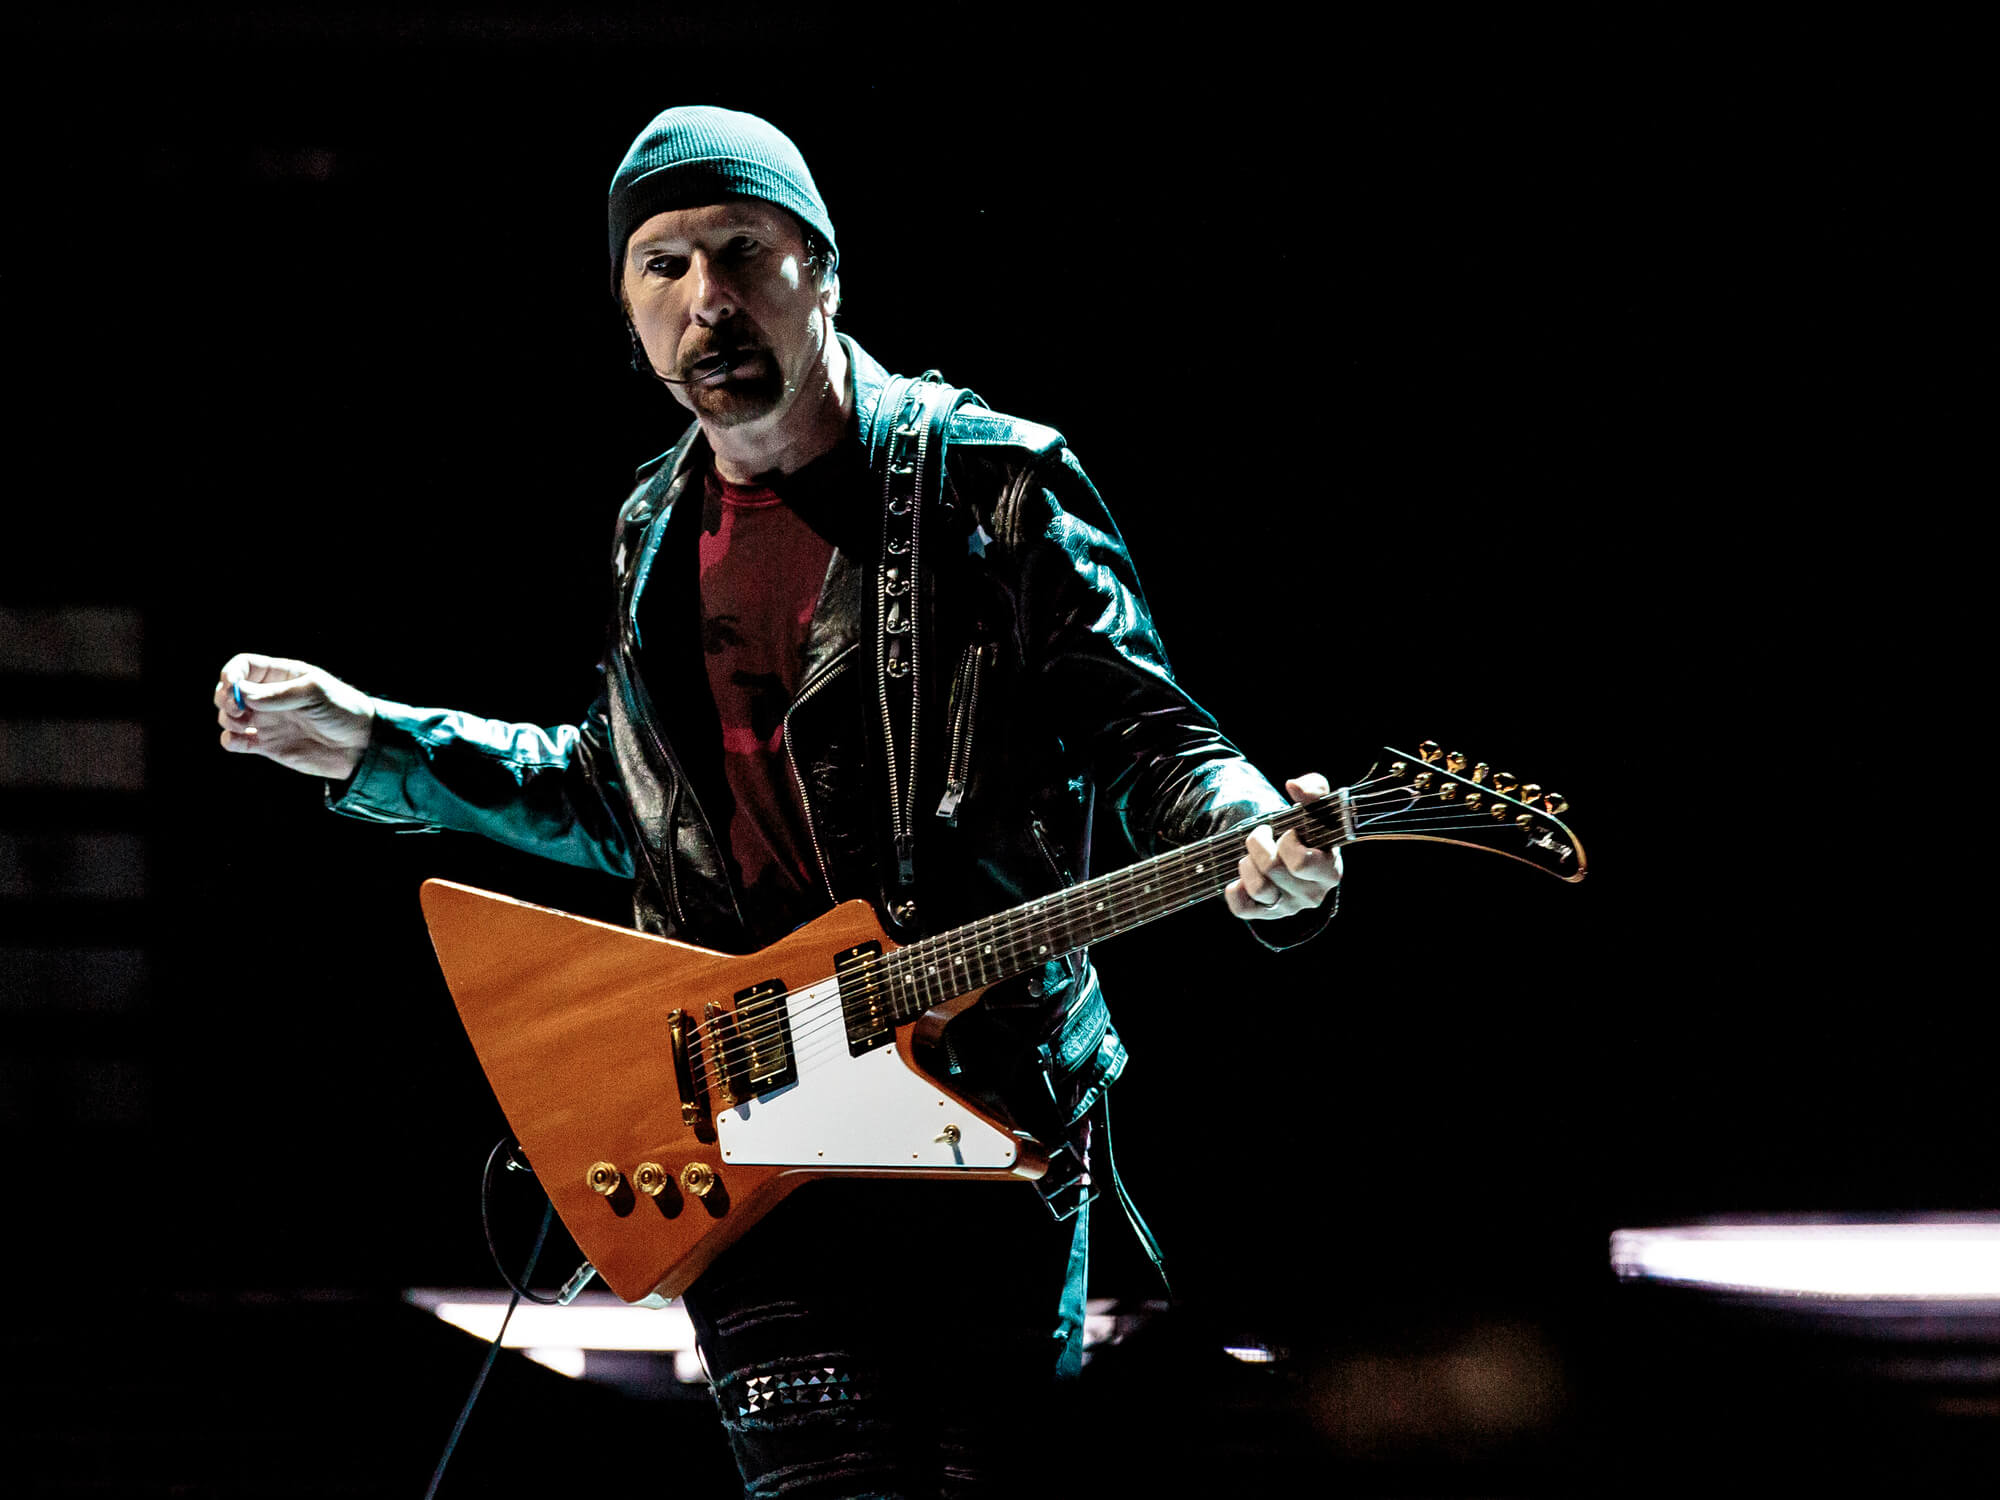 U2 guitarist The Edge